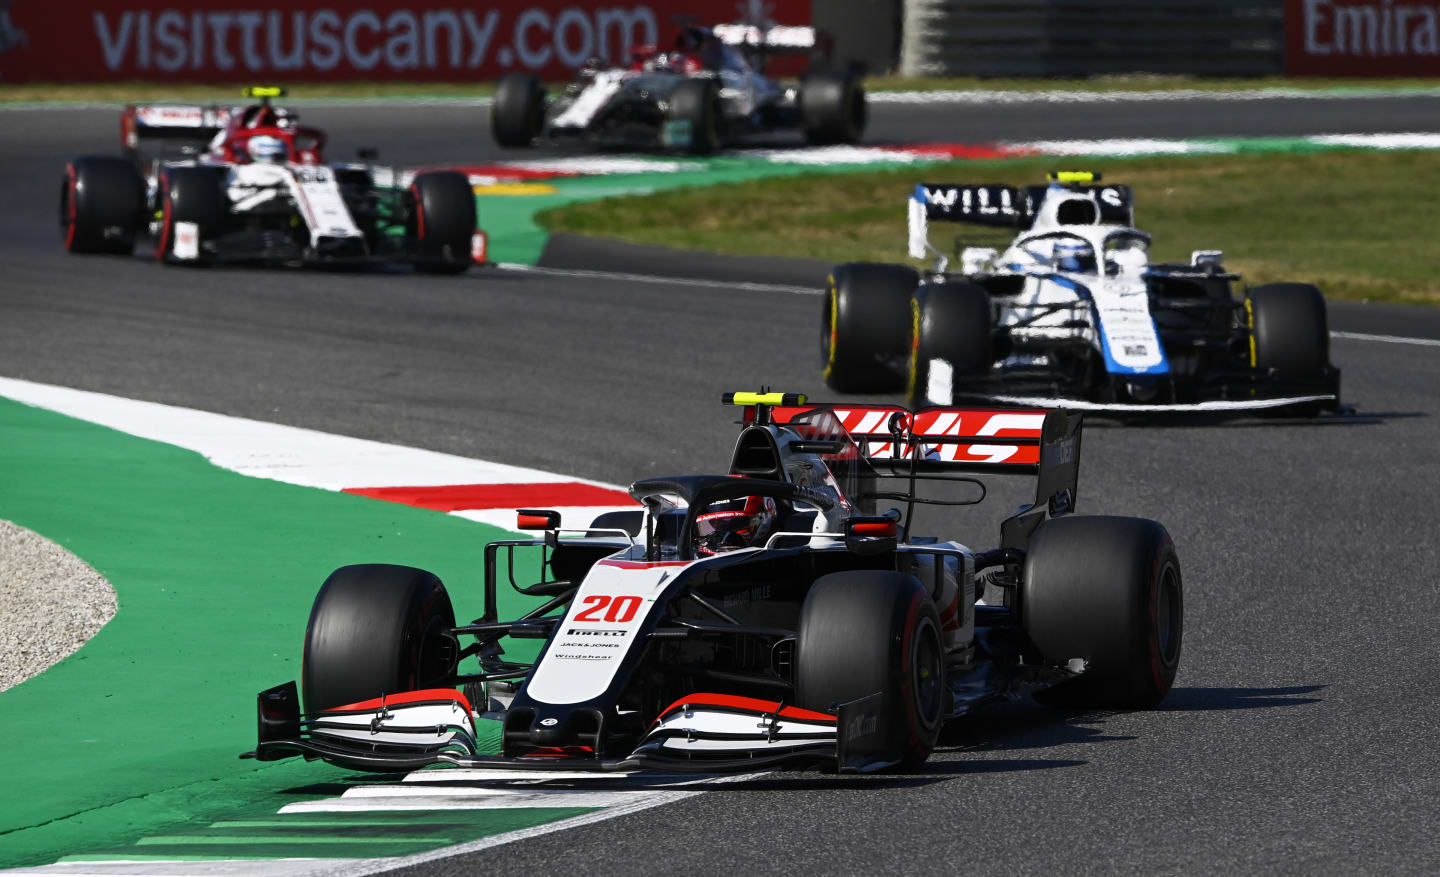 SCARPERIA, ITALY - SEPTEMBER 13: Kevin Magnussen of Denmark driving the (20) Haas F1 Team VF-20